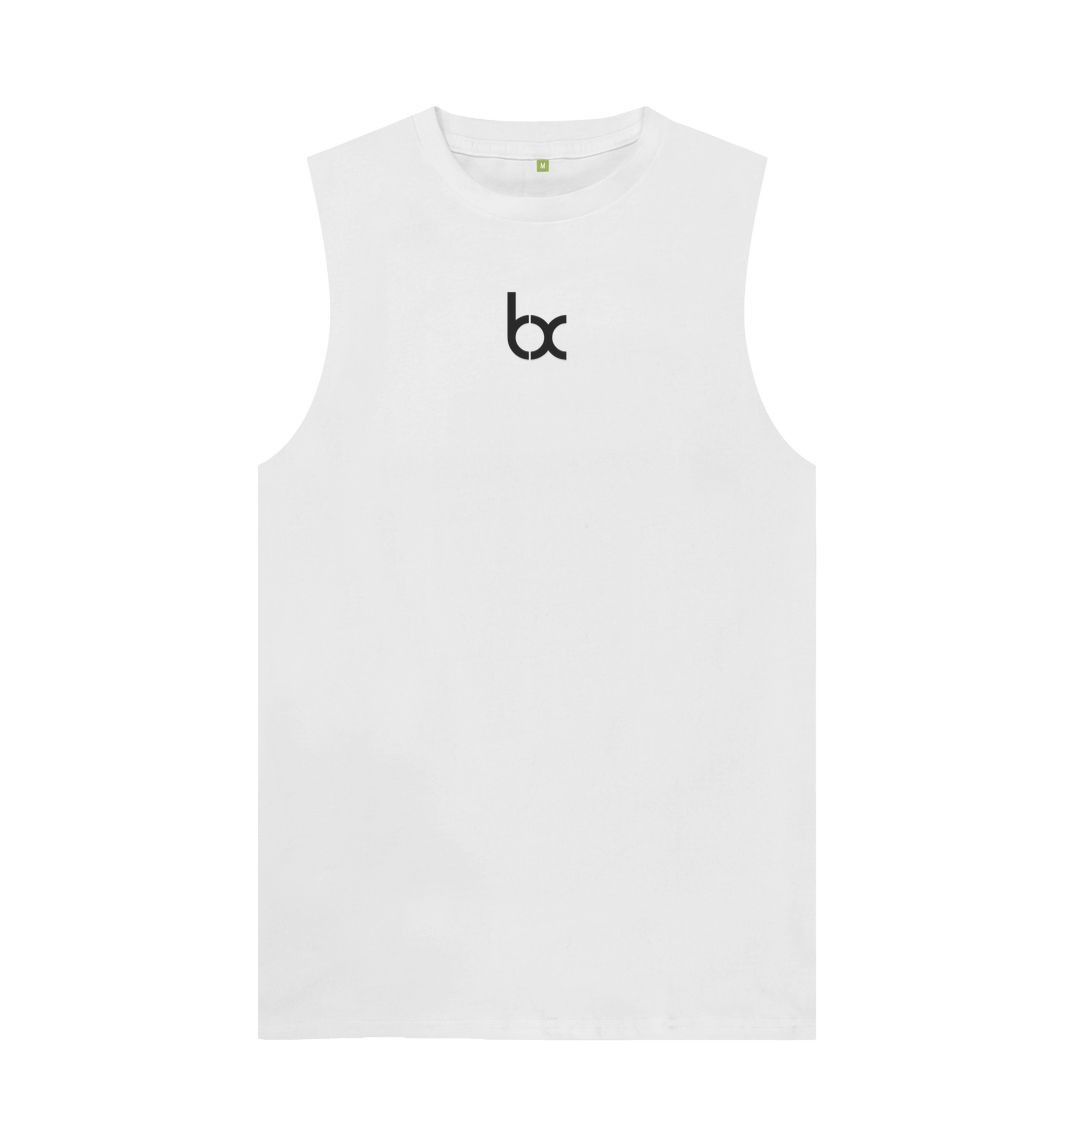 White BX Vest Top - white with black logo